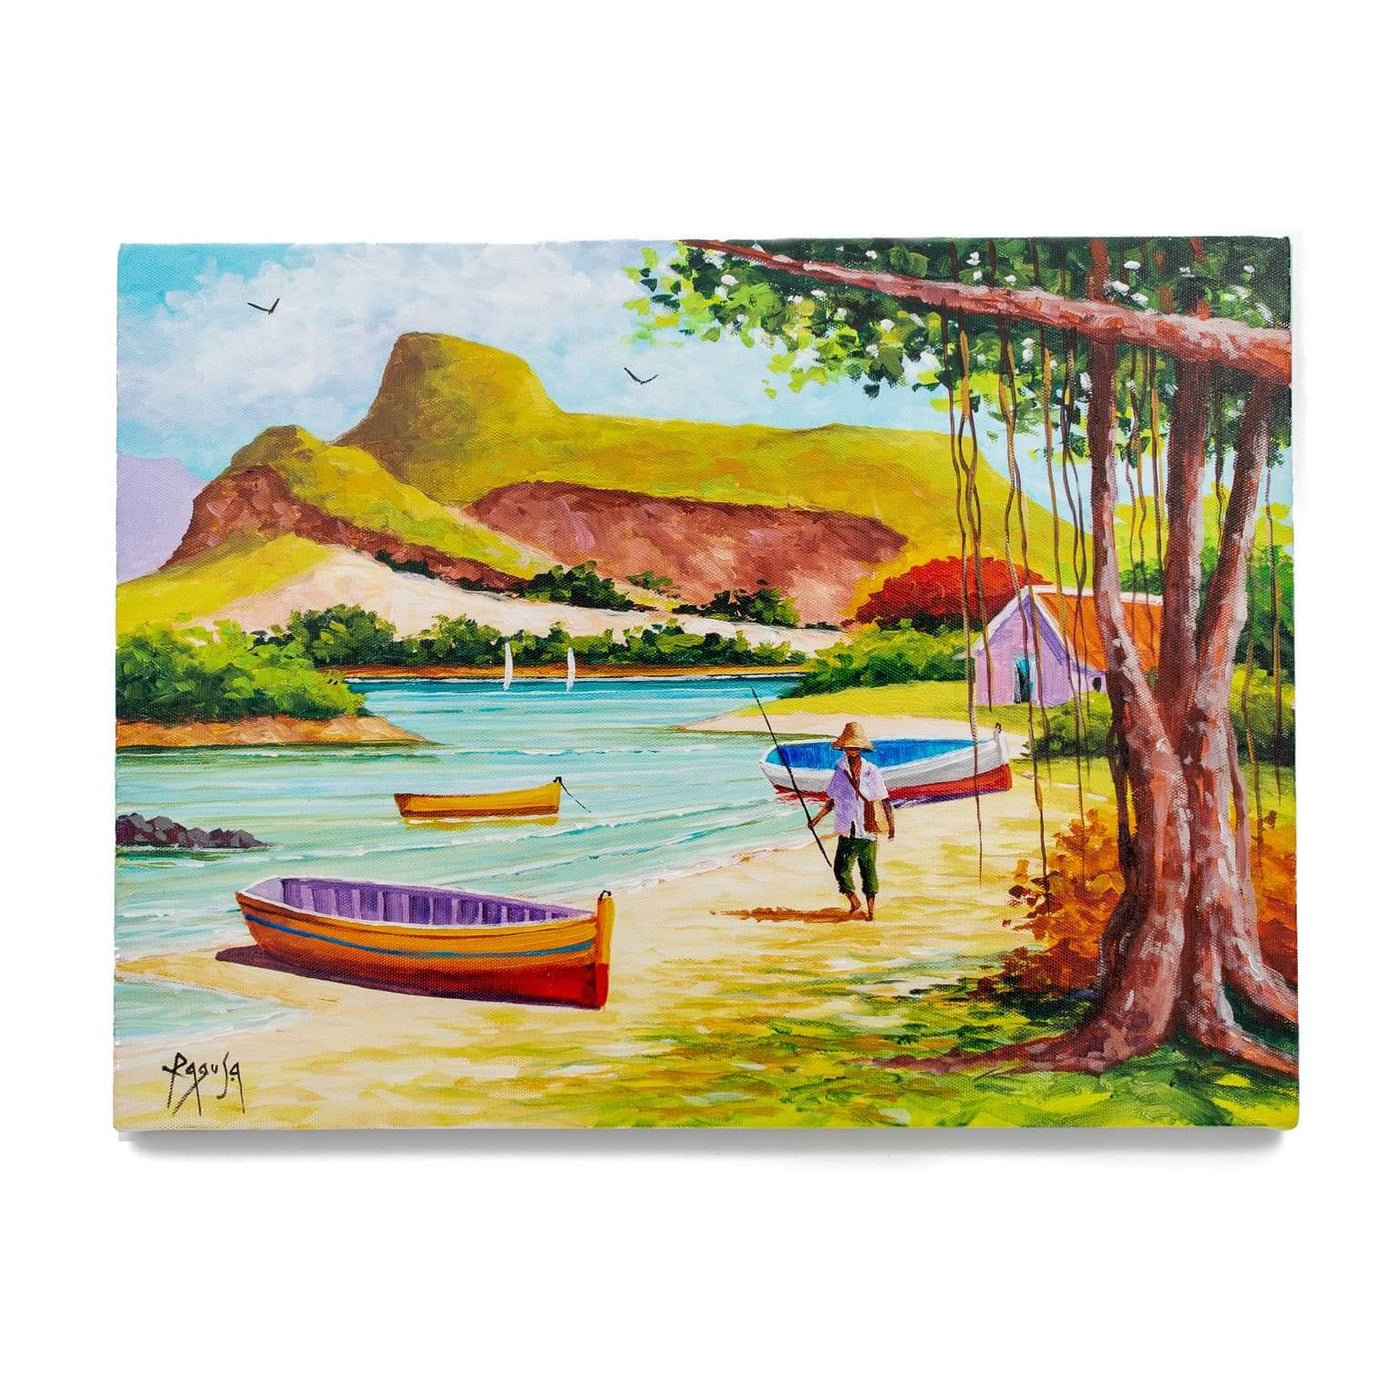 Mauritius-Authentic-HandMade-Painting-Pino Ragusa, "Montaigne Lion - Mahebourg"-DodoMarket